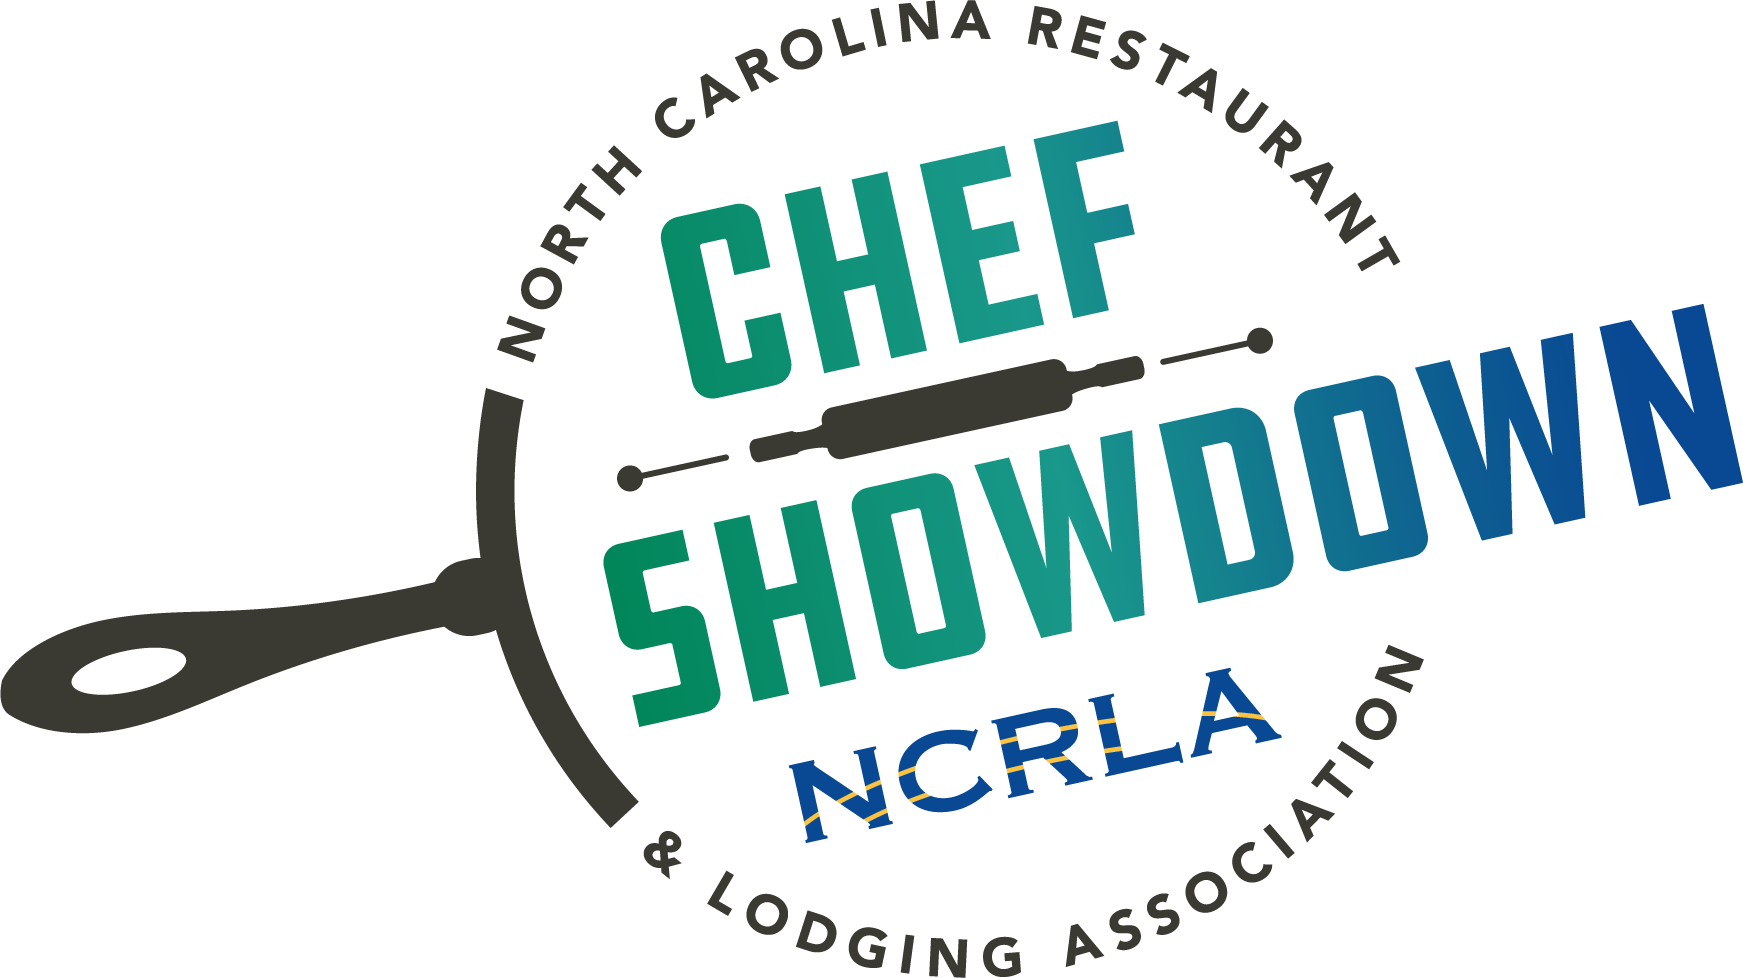 NCRLA chef showdown logo